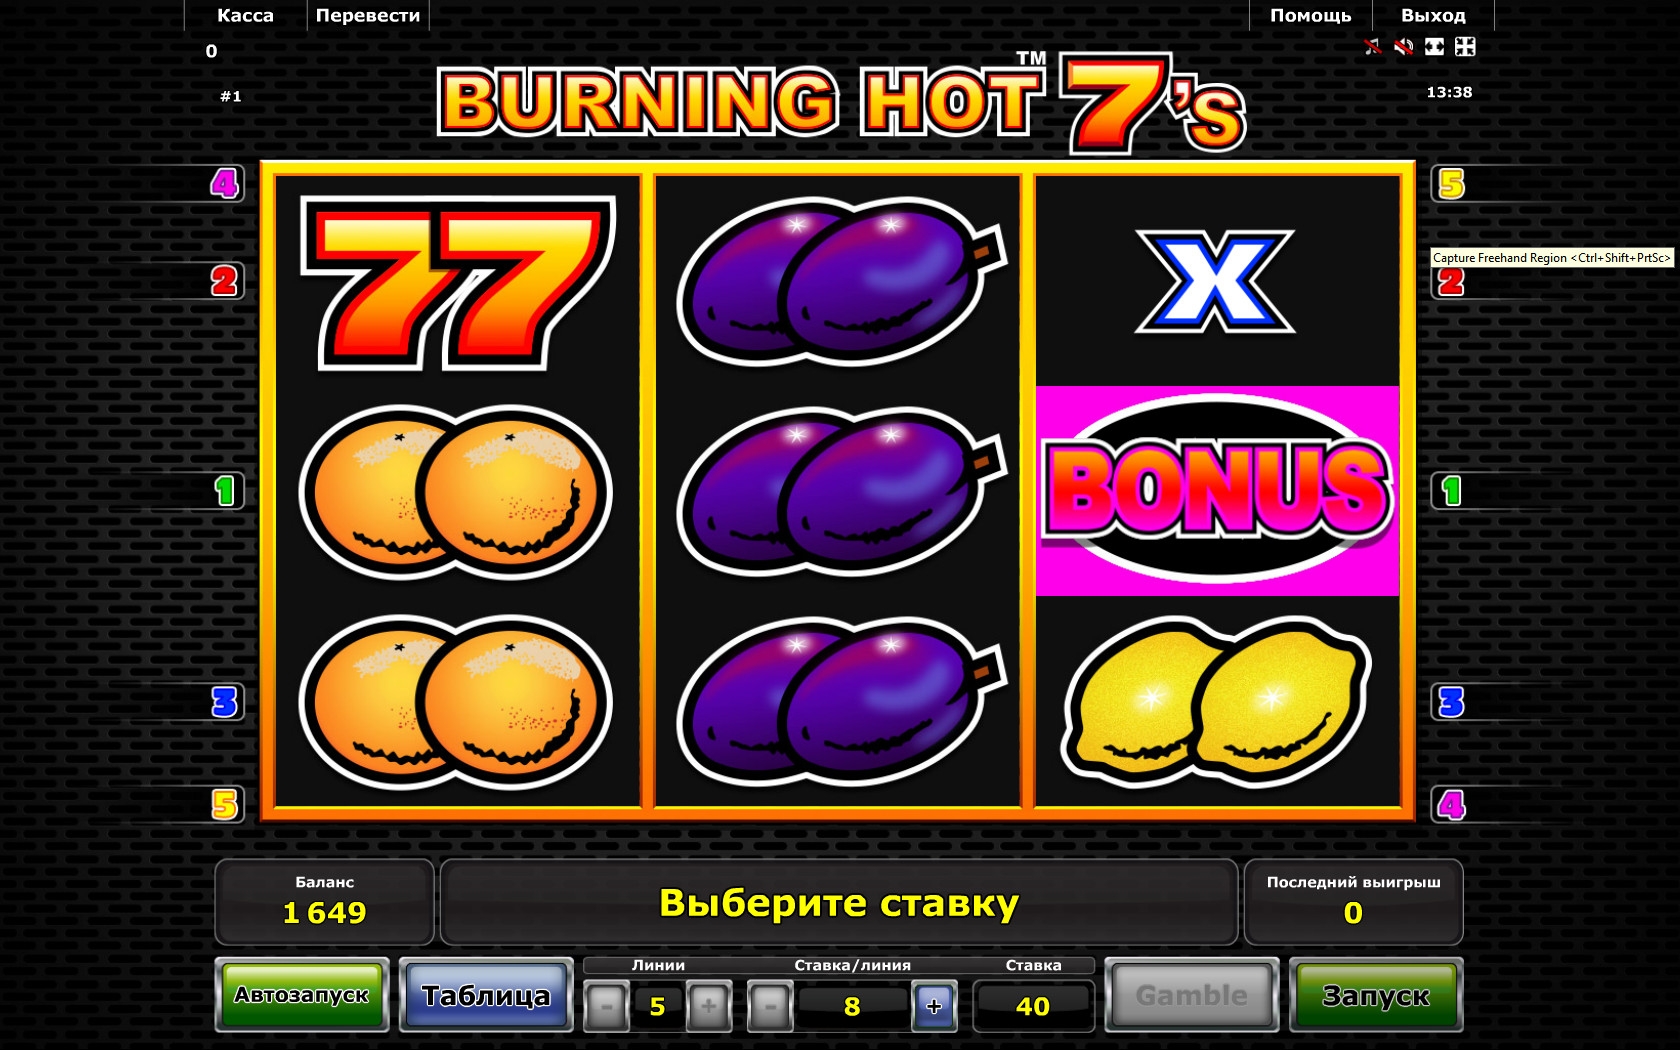 Burning Hot 7’s (Burning Hot 7’s) from category Slots